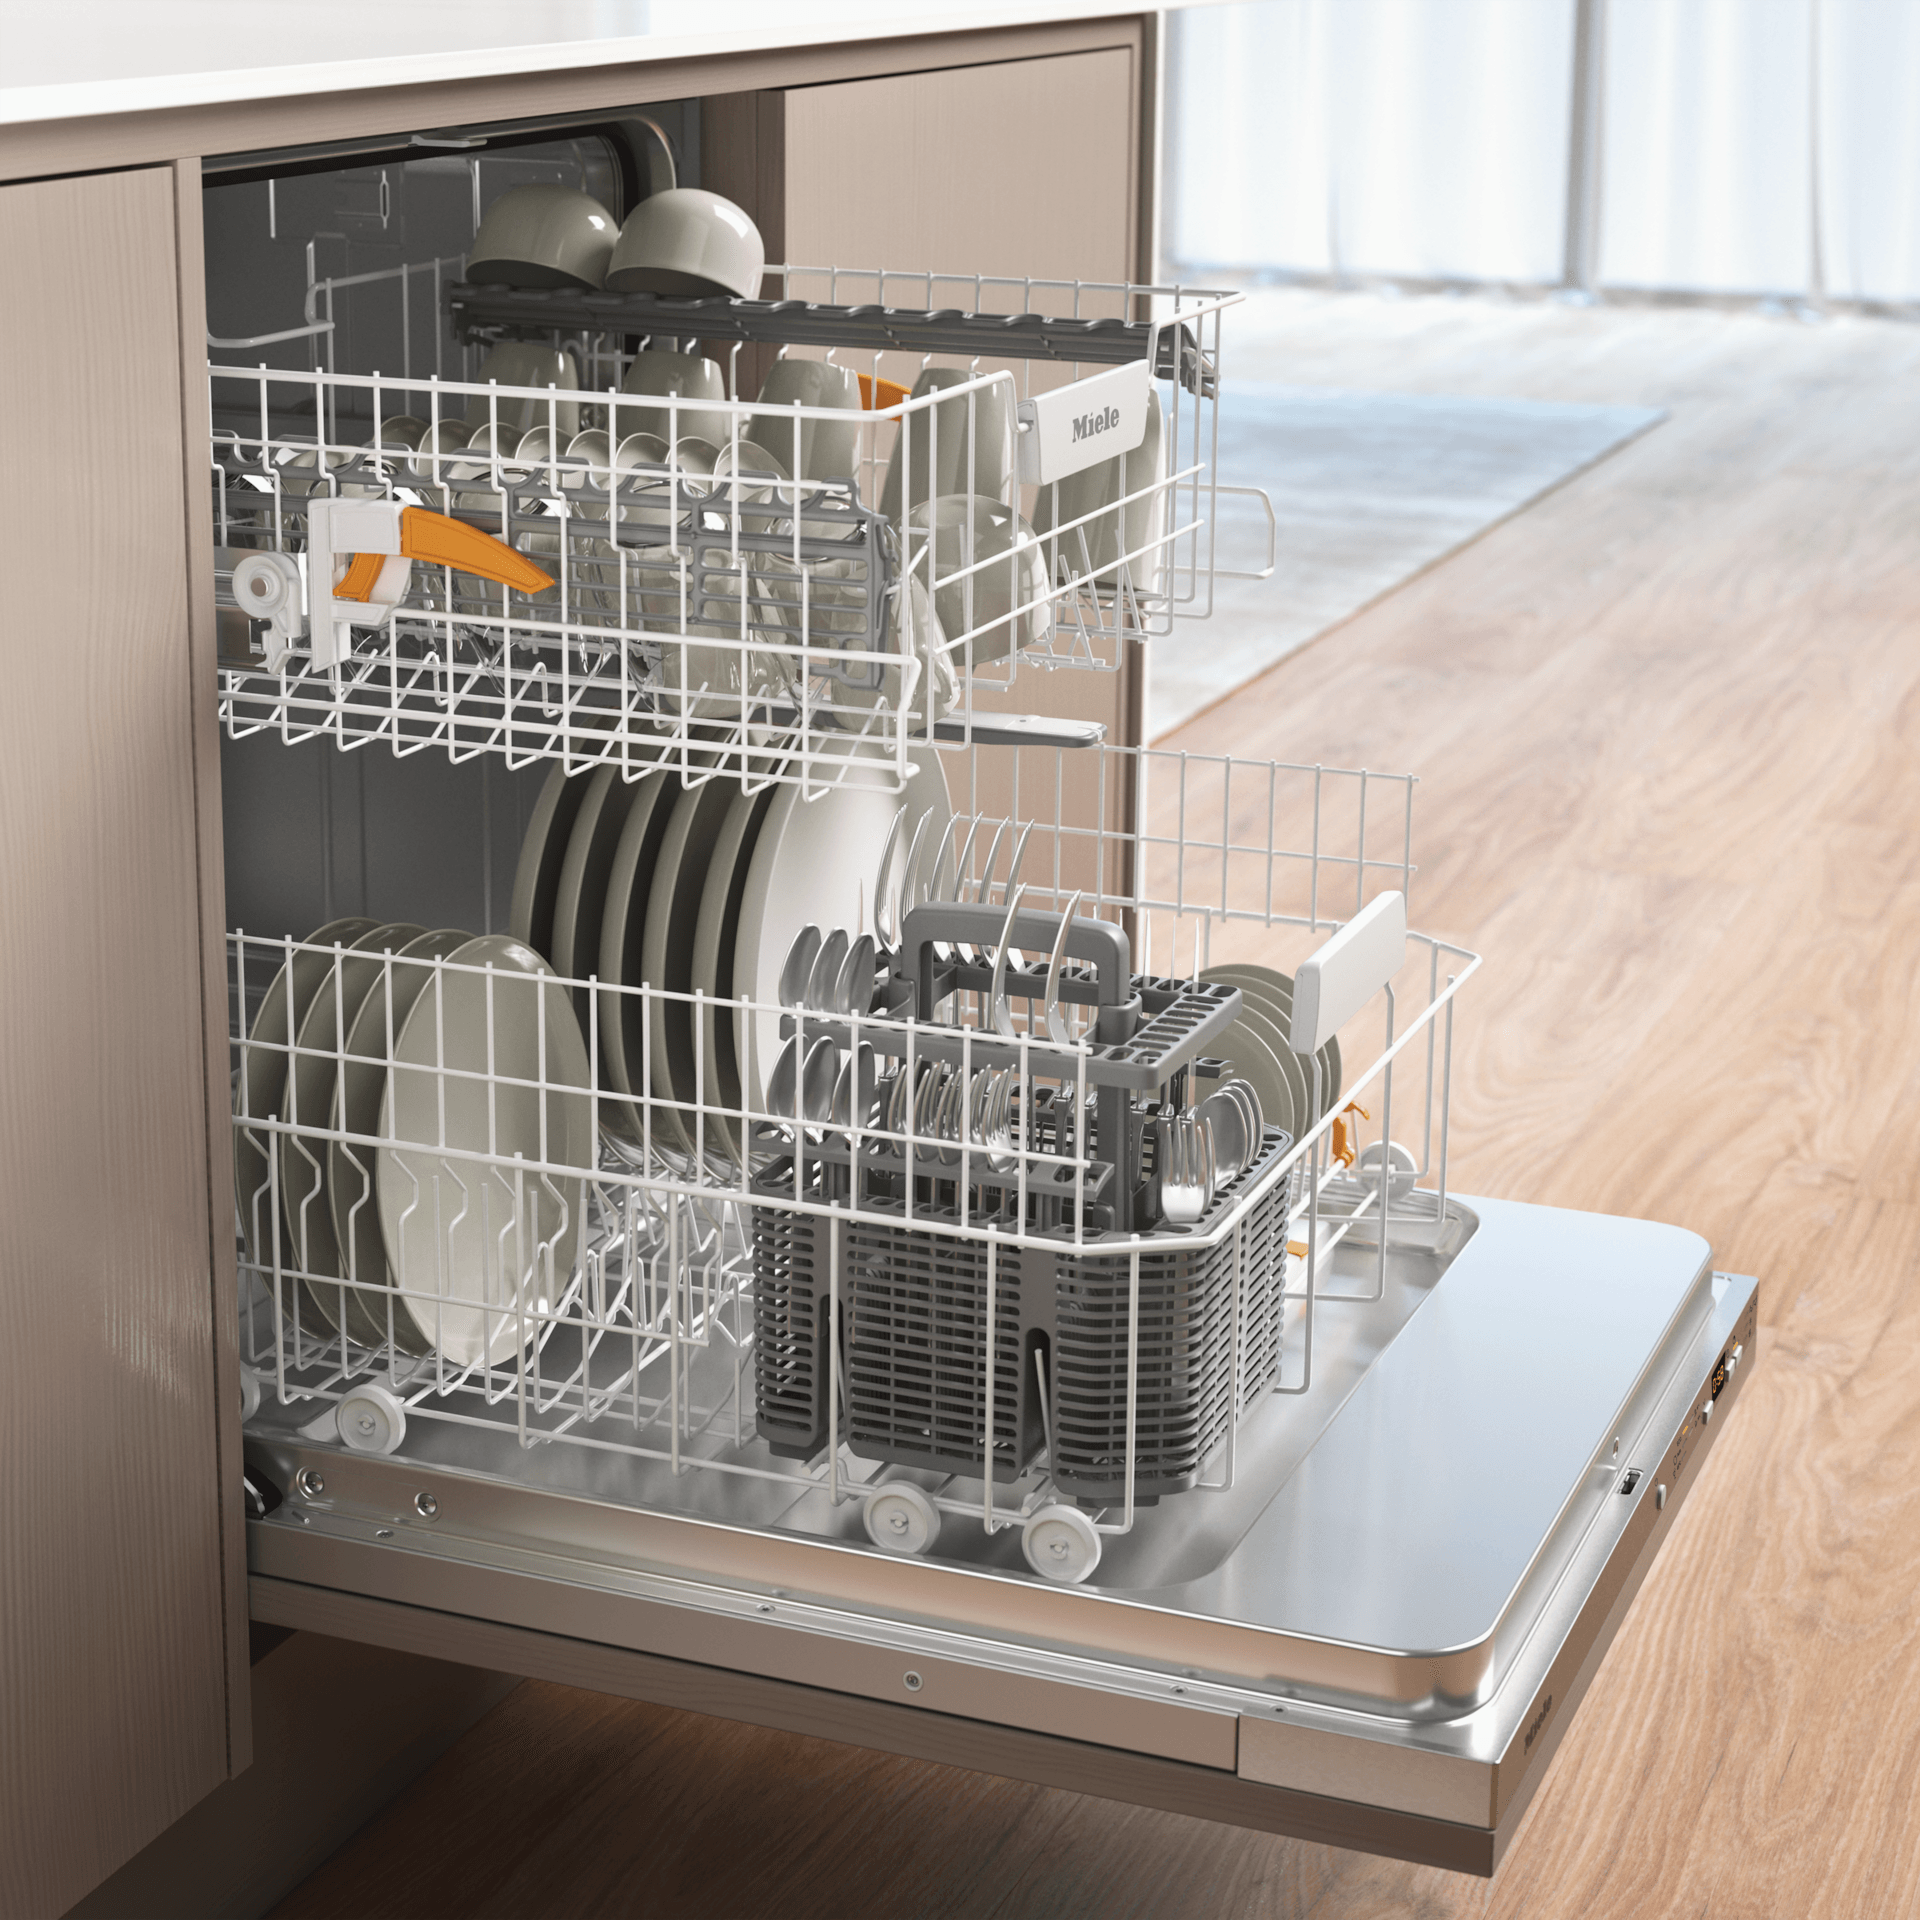 Miele Fully-Integrated Dishwashers G5150 Vi - Posh Import